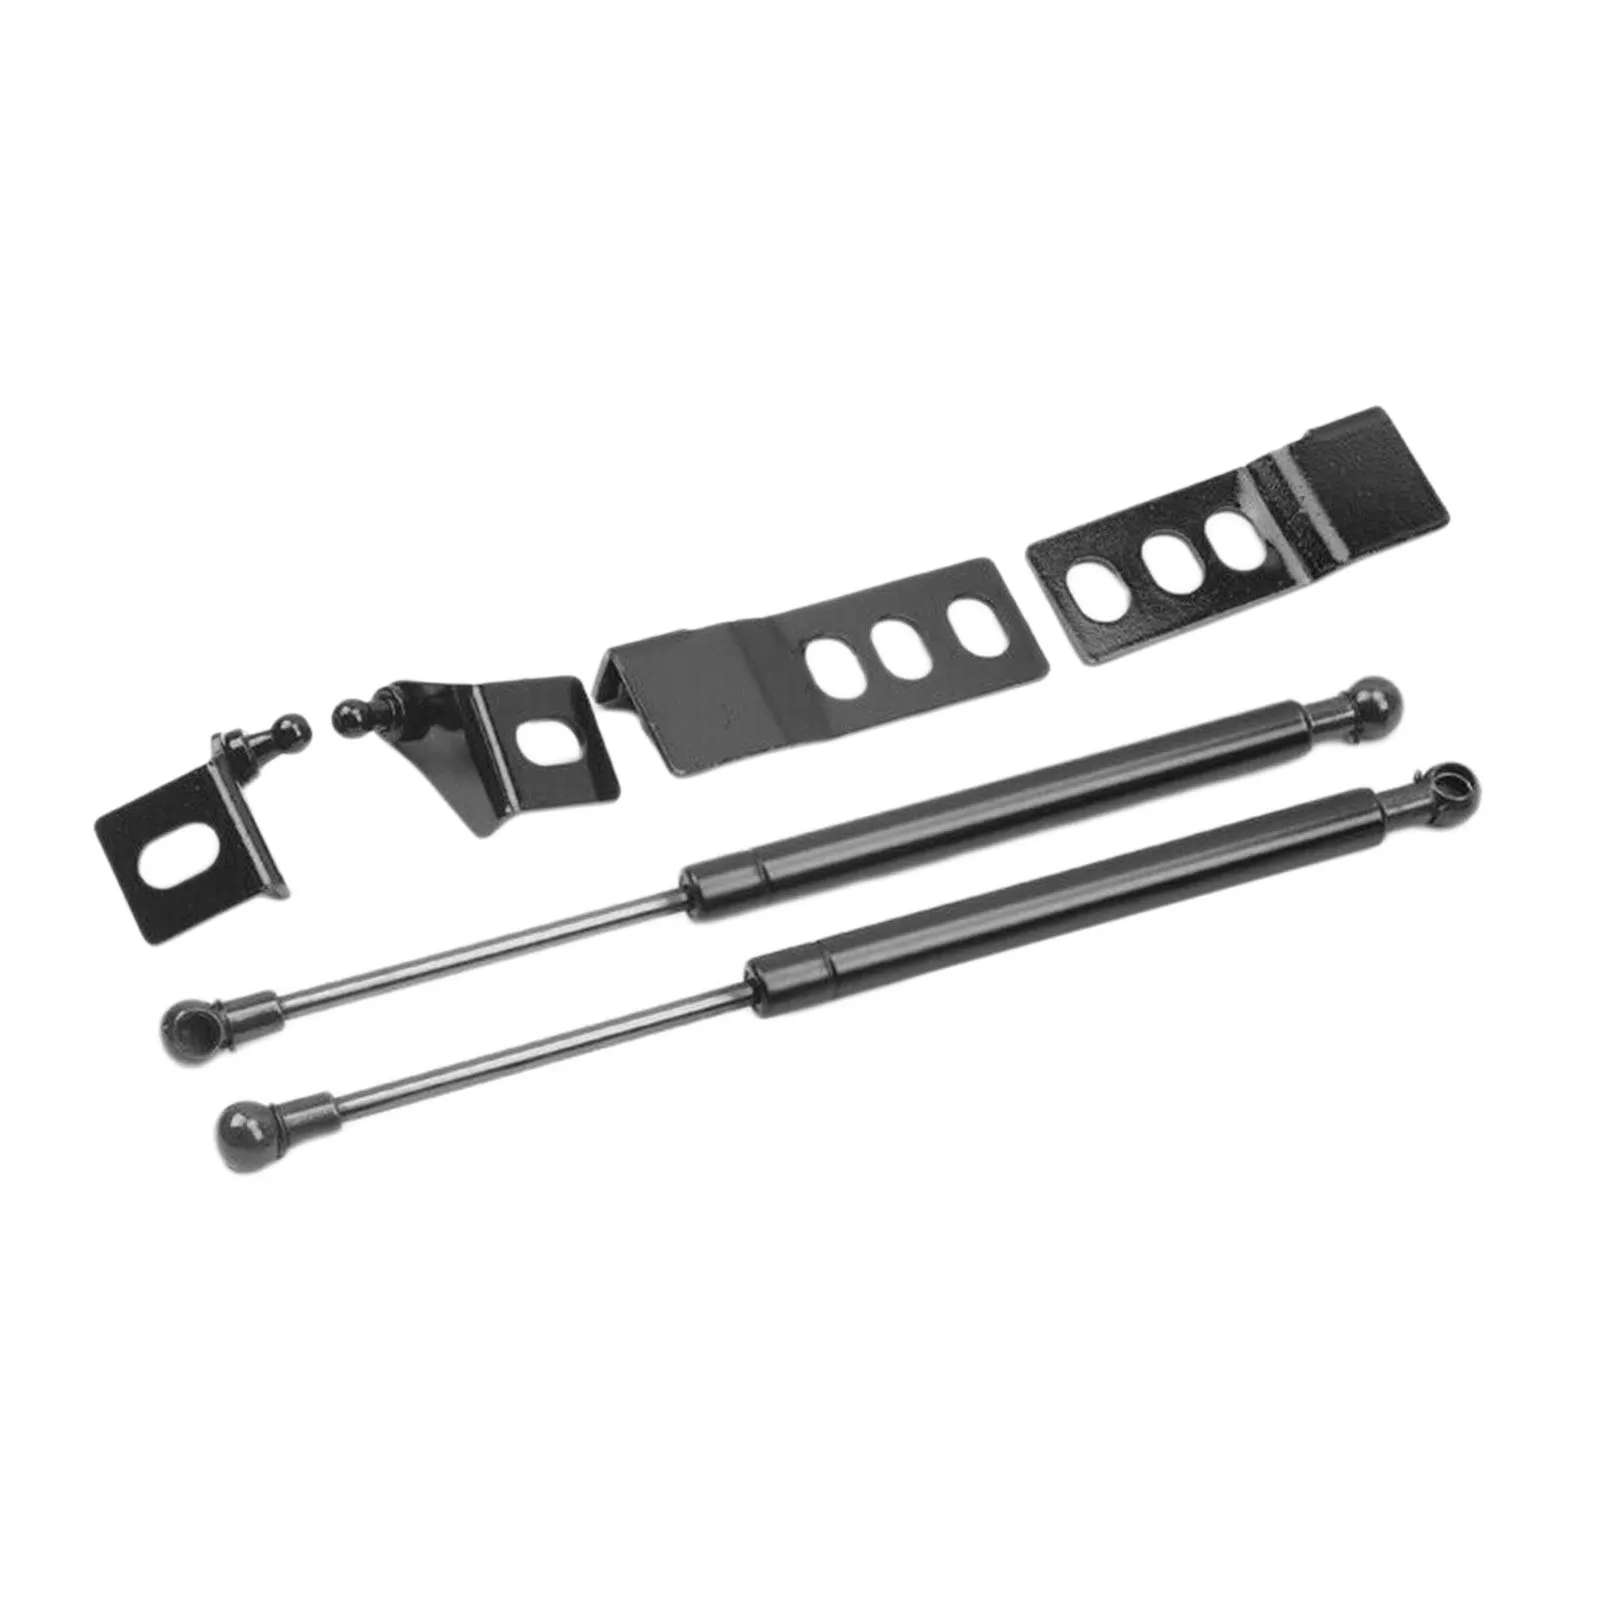 Vehicle Front Hood Hydraulic Rod Strut Shock Bar Moulding Set Supplies Kit for Toyota Rav-4 19-21 2019-2021 2019 2020 2021